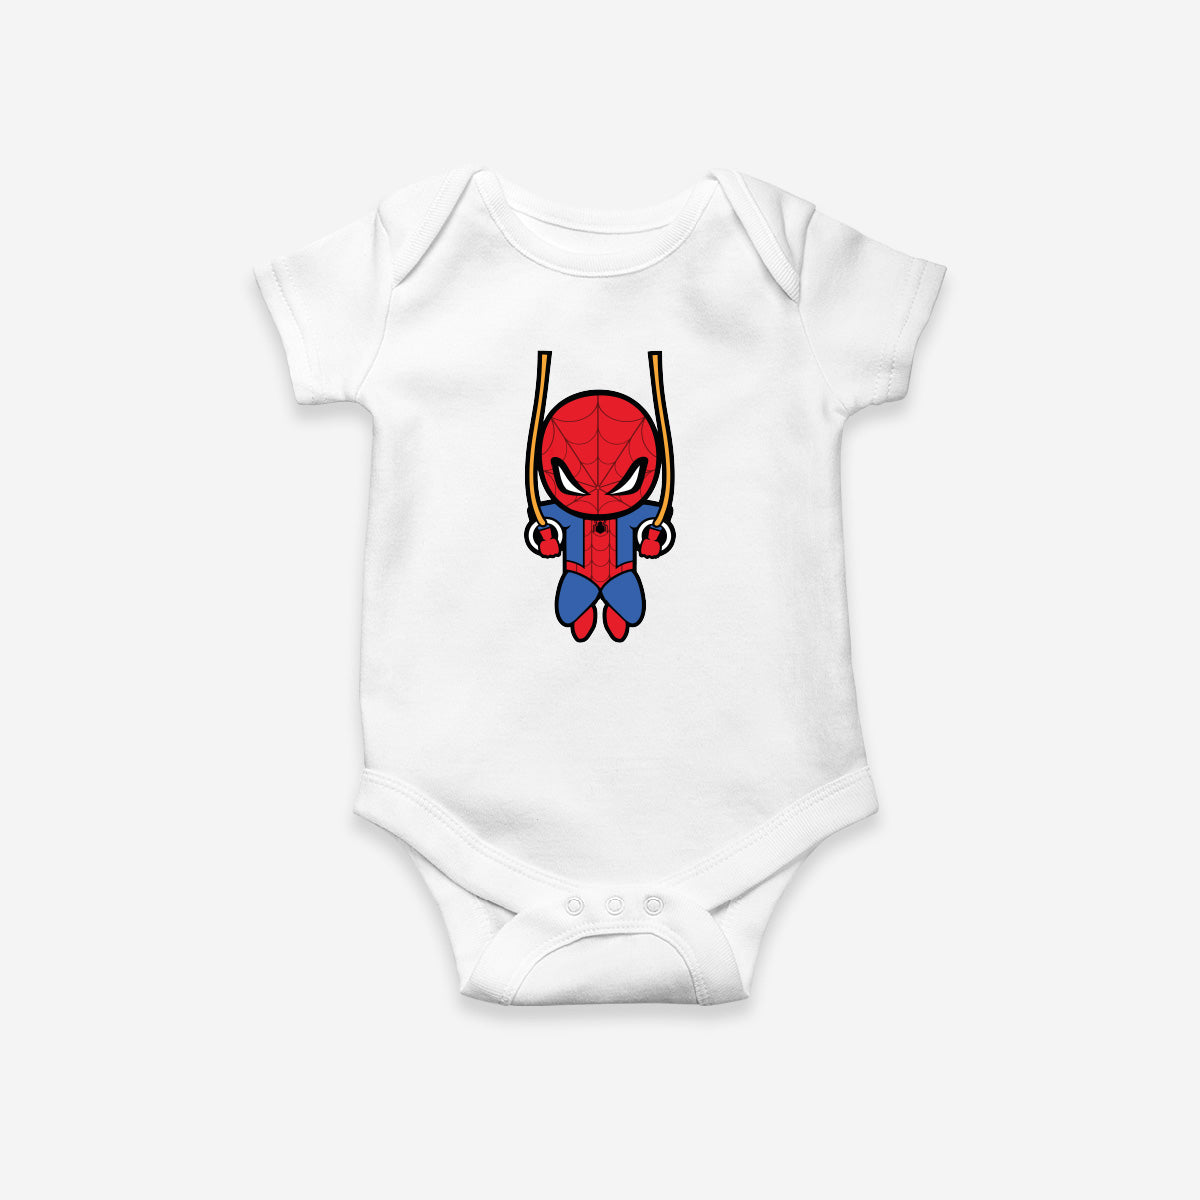 Body - Spiderman 2